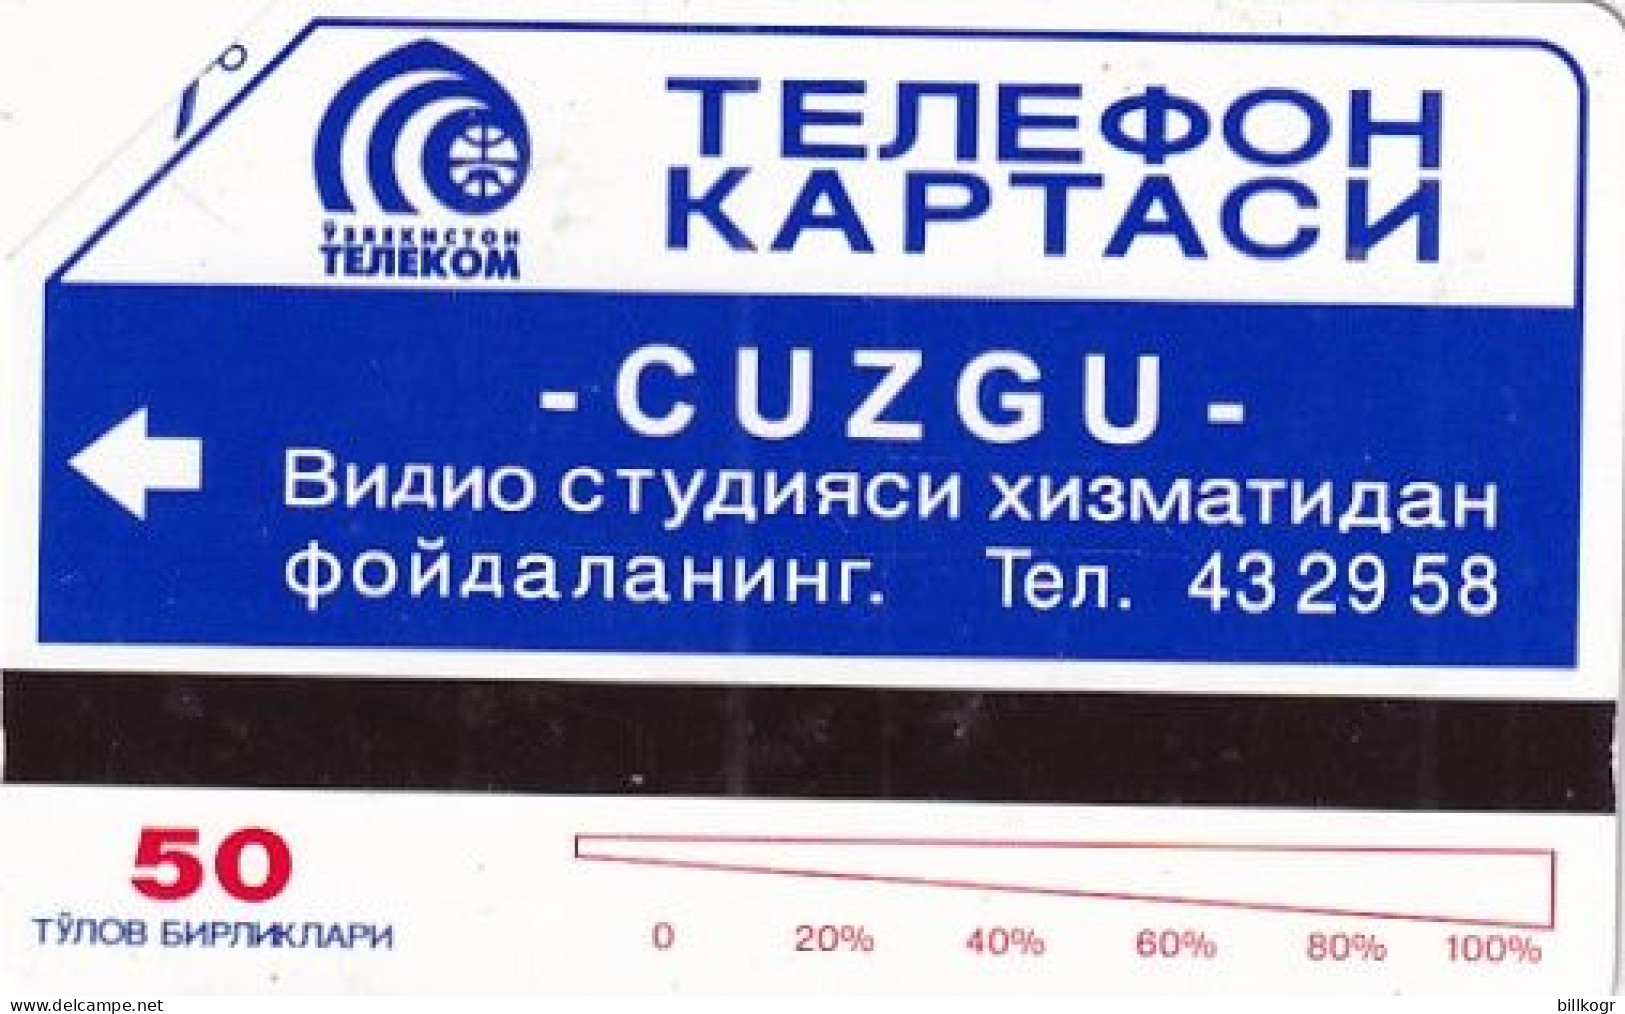 UZBEKISTAN(Urmet) - Cardphone(thin Band), Tirage %15000, Used - Oezbekistan